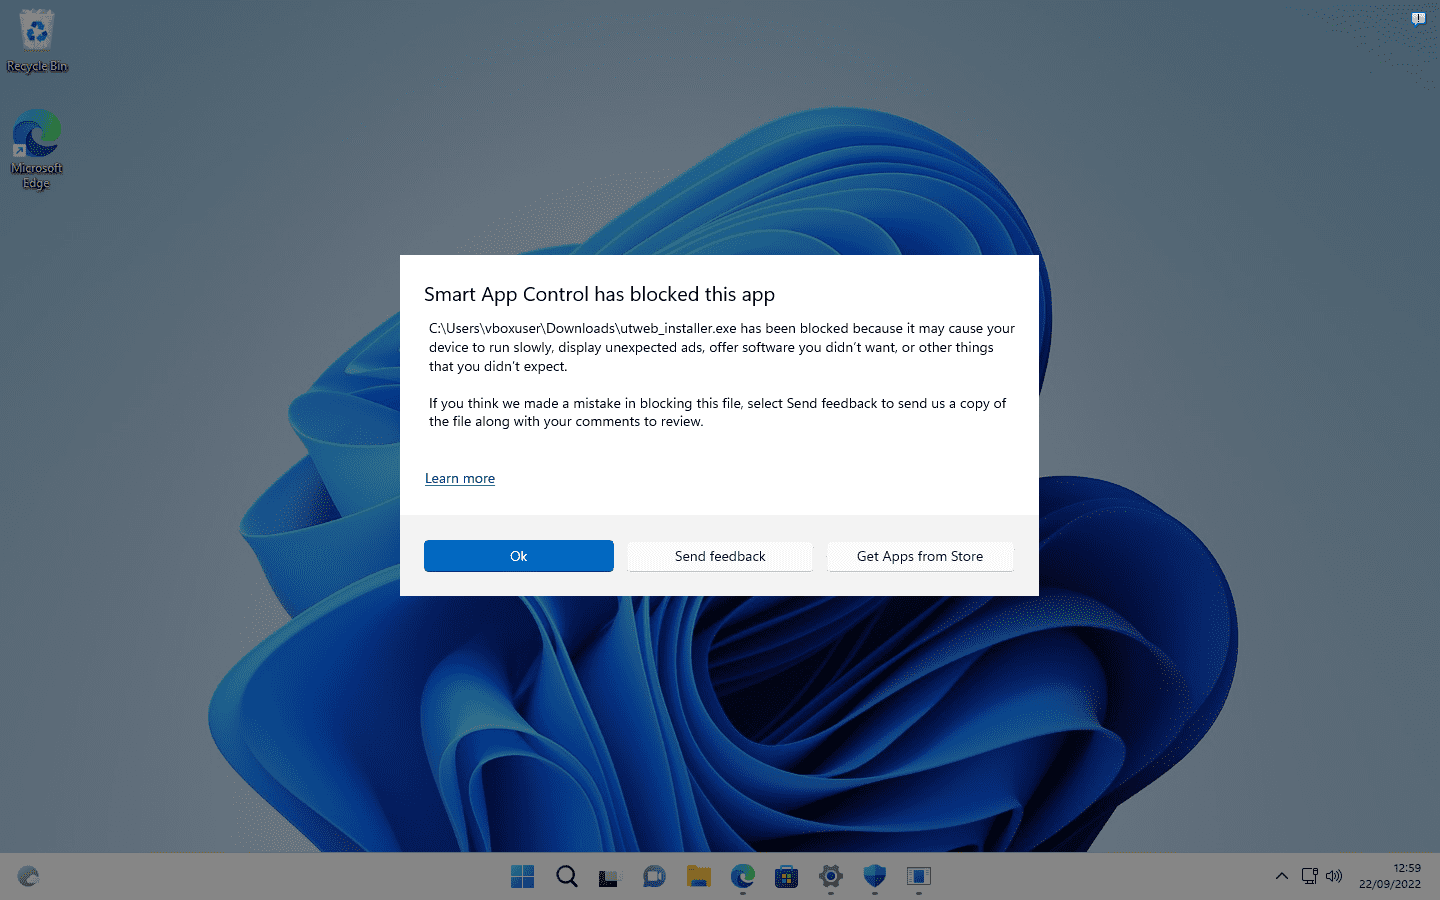 Windows 11 2022 Update: Security Improvements